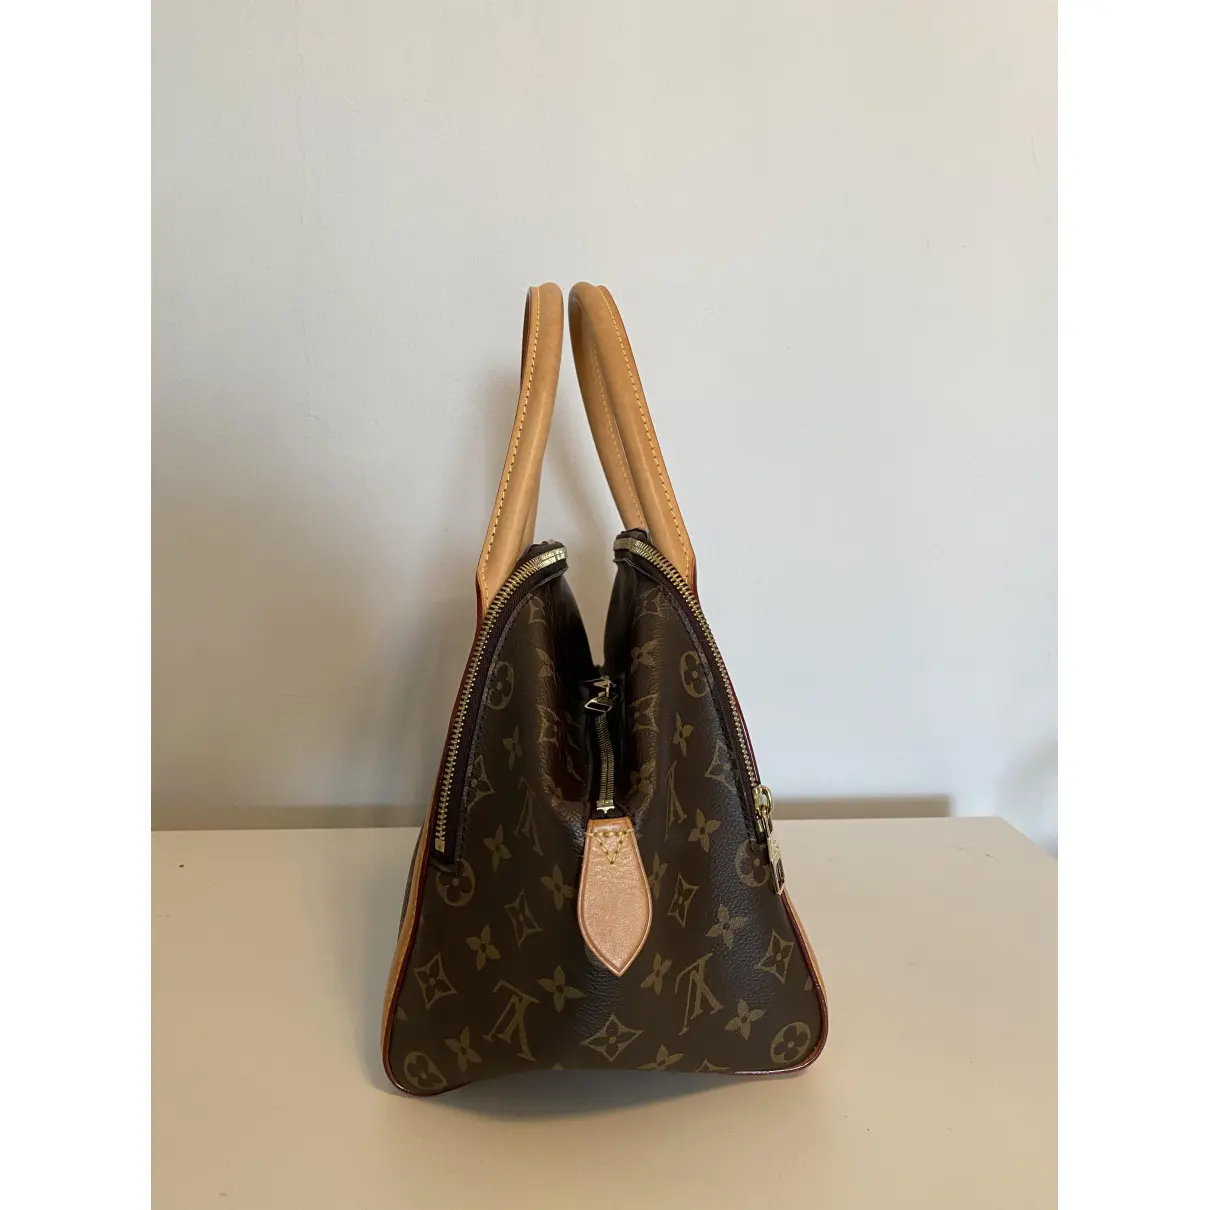 Marais leather handbag Louis Vuitton